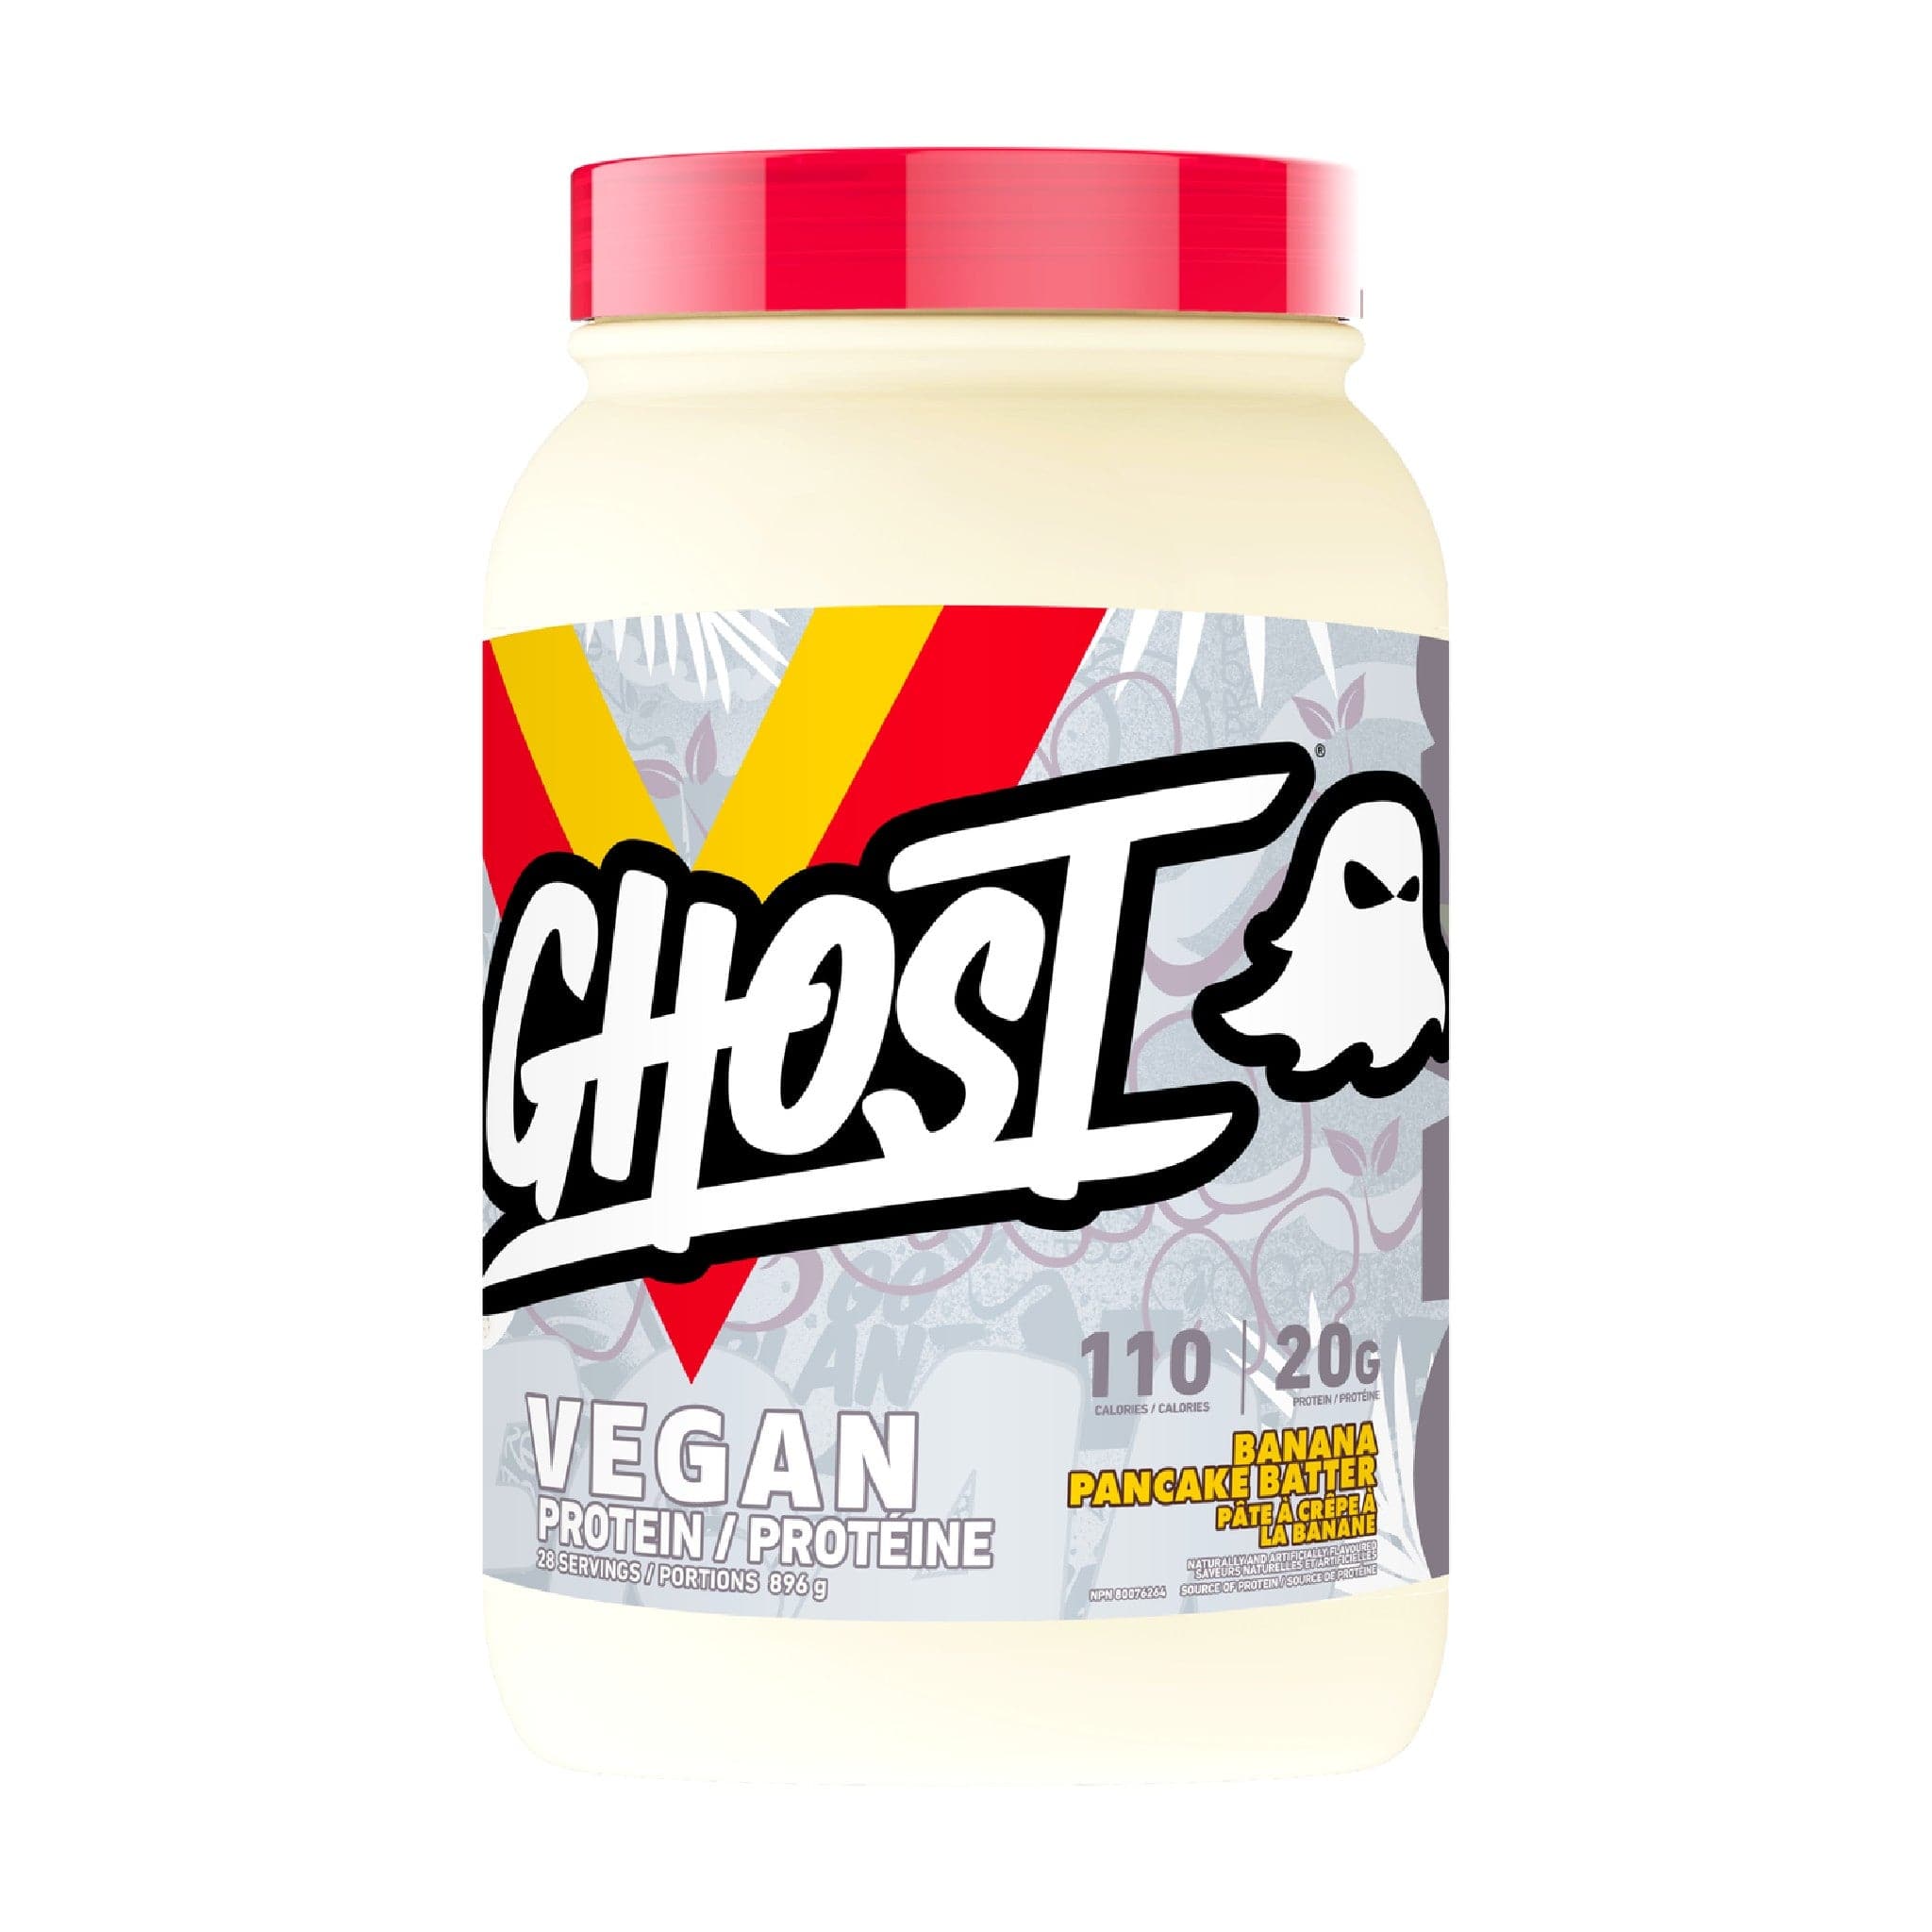 GHOST Vegan Protein 2lb